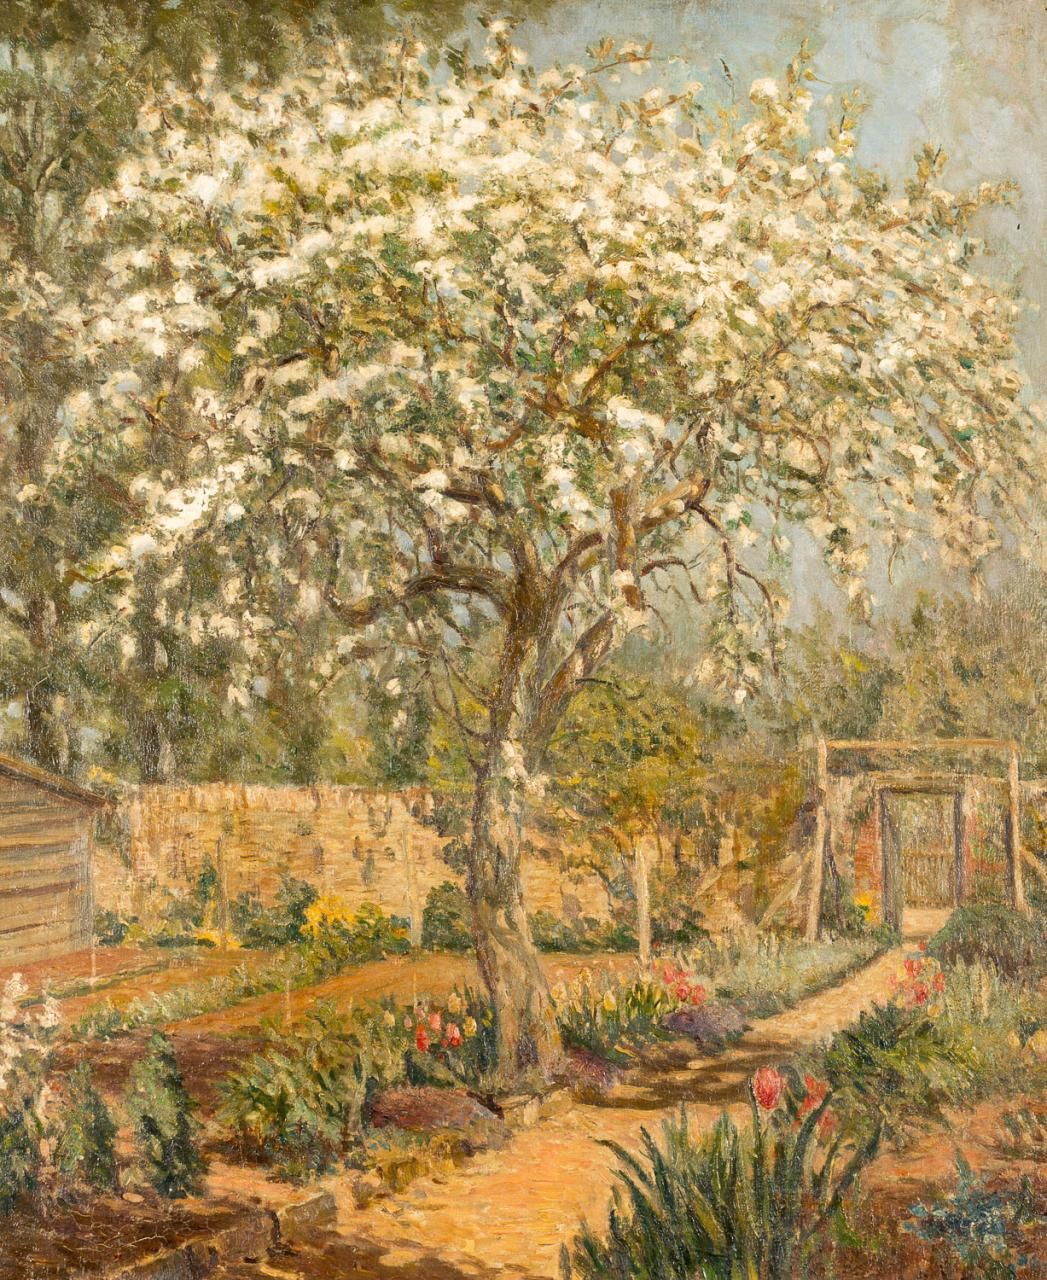 ESCUELA ESPAÑOLA, S. XX 有杏仁树的风景
布面油画
60 x 50 cm